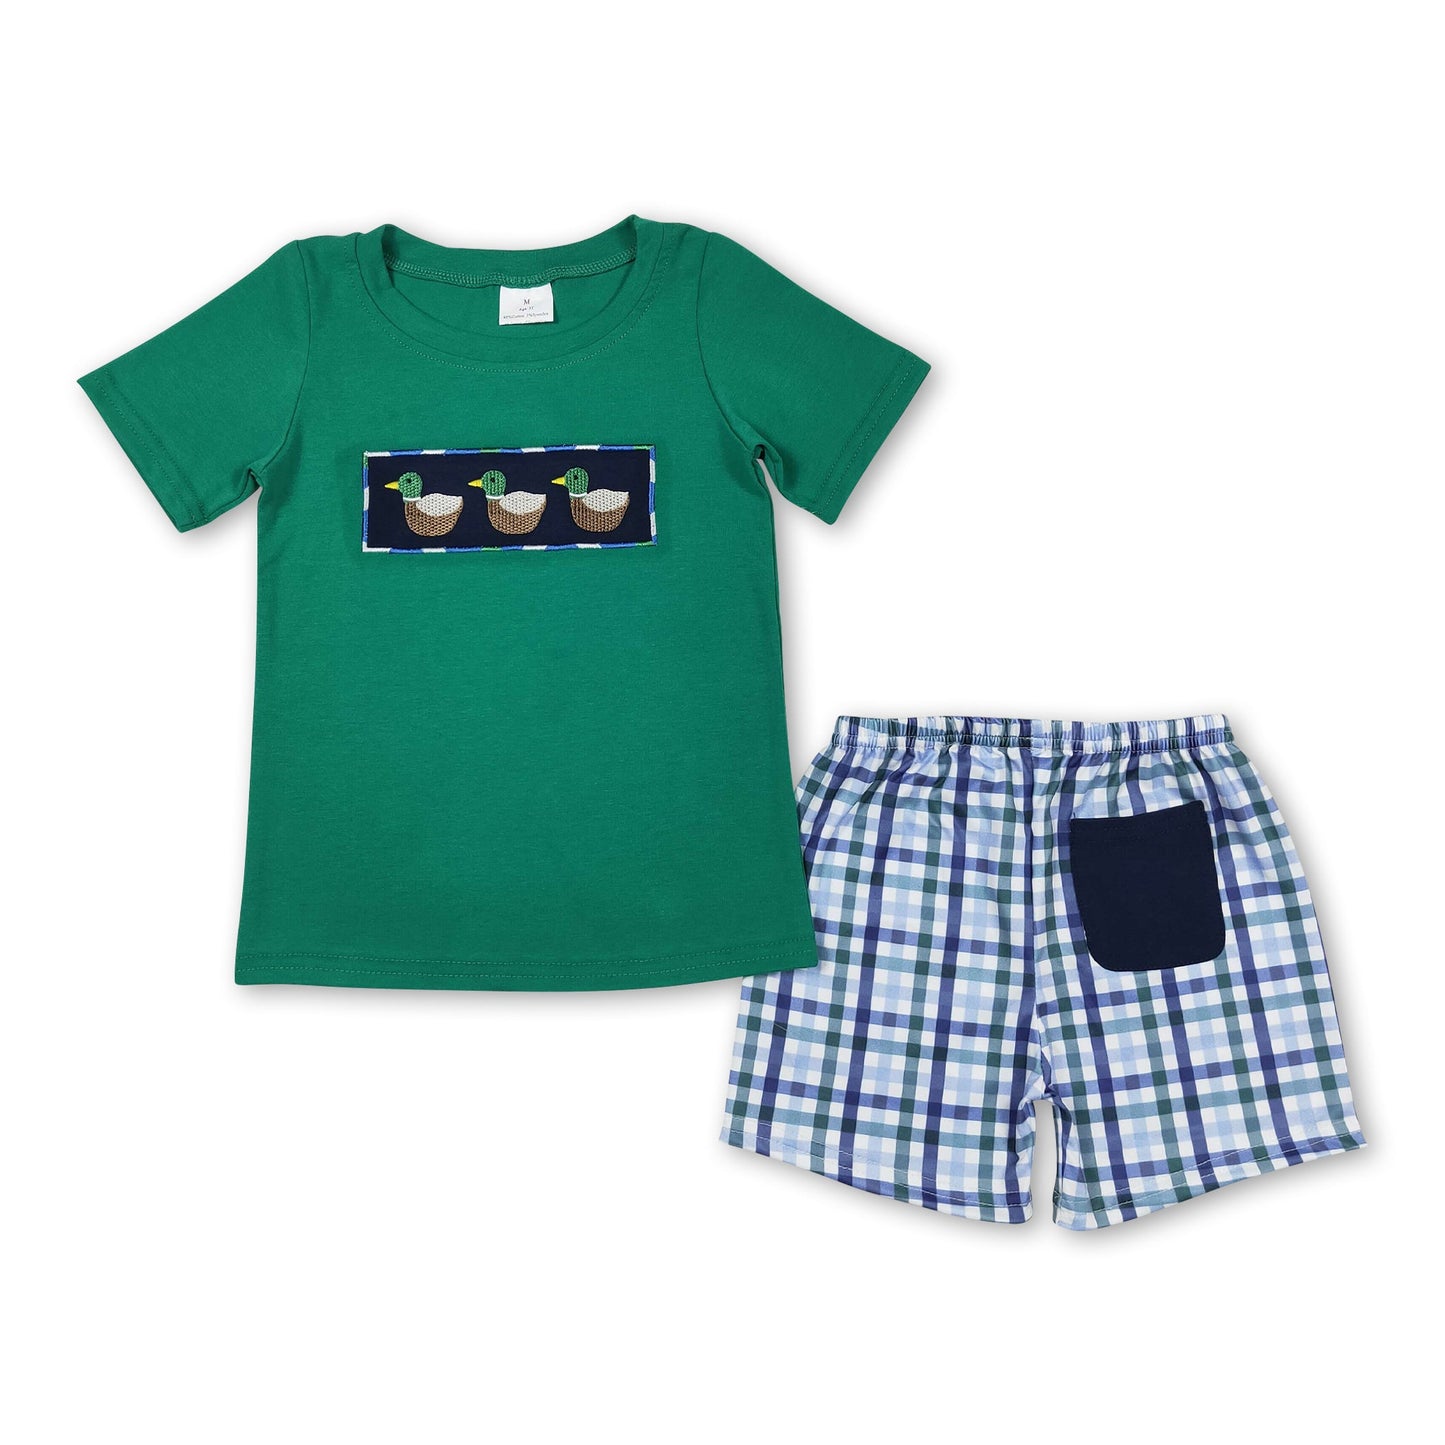 Green duck top plaid shorts boys clothes